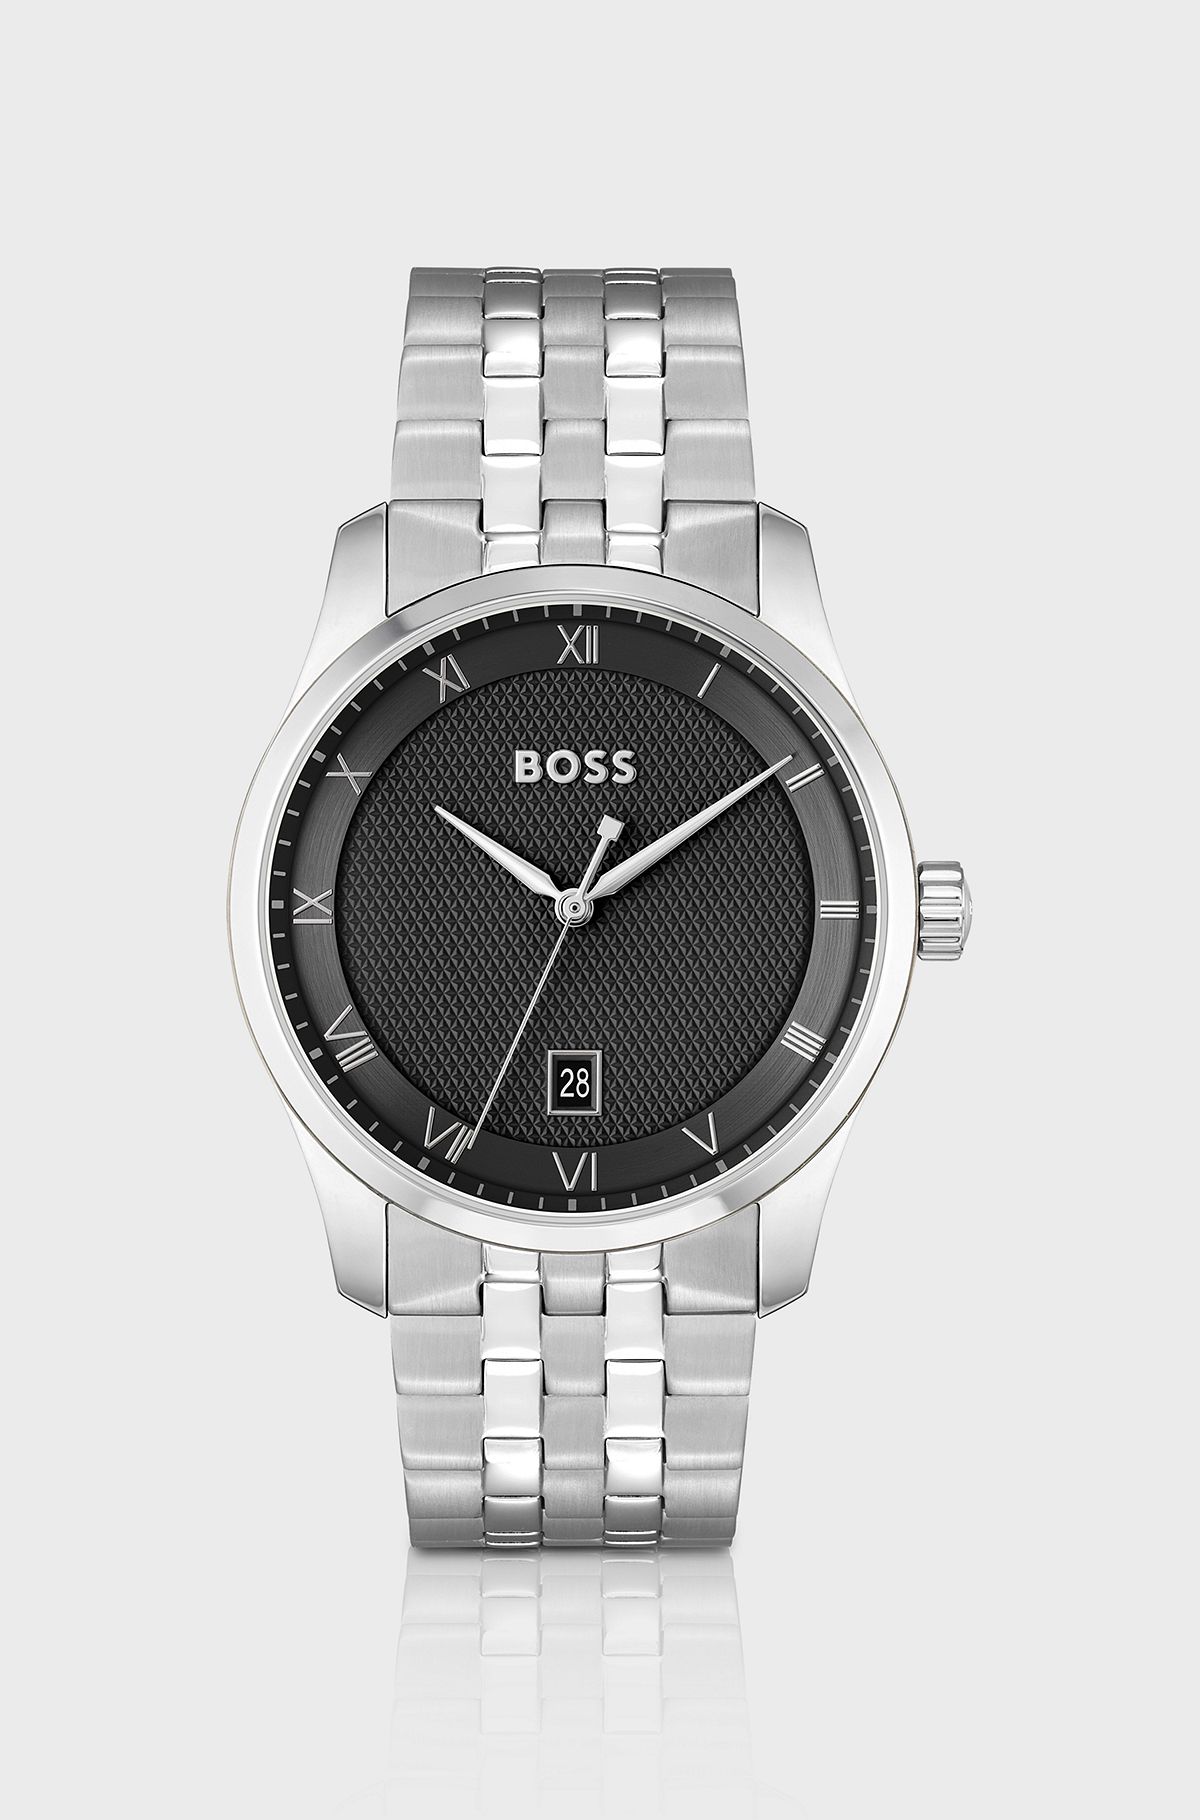 Multi-link-bracelet watch with black patterned dial, Silver